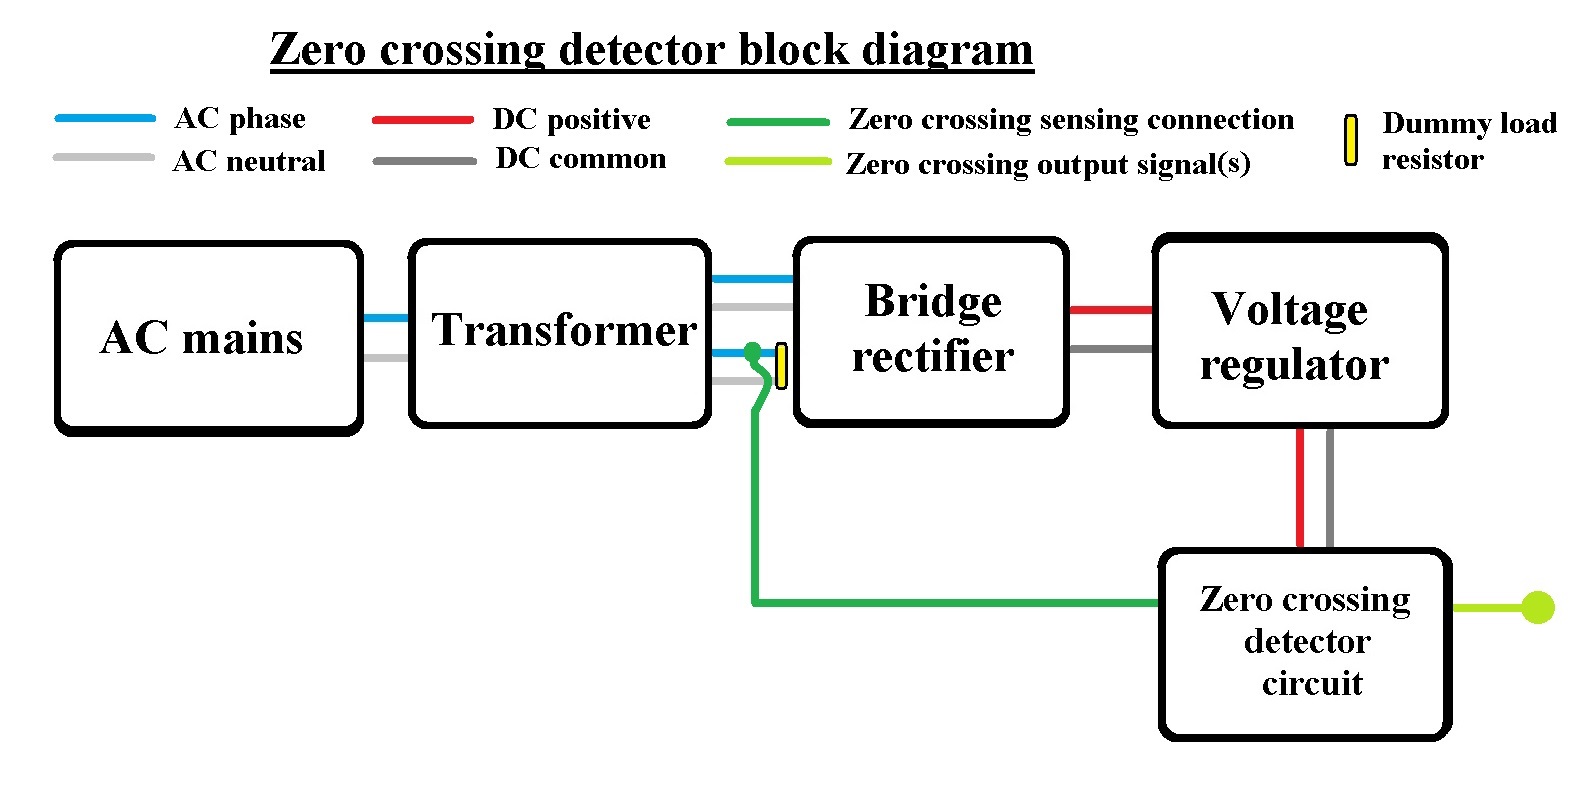 zcd circuit block diagram.jpg